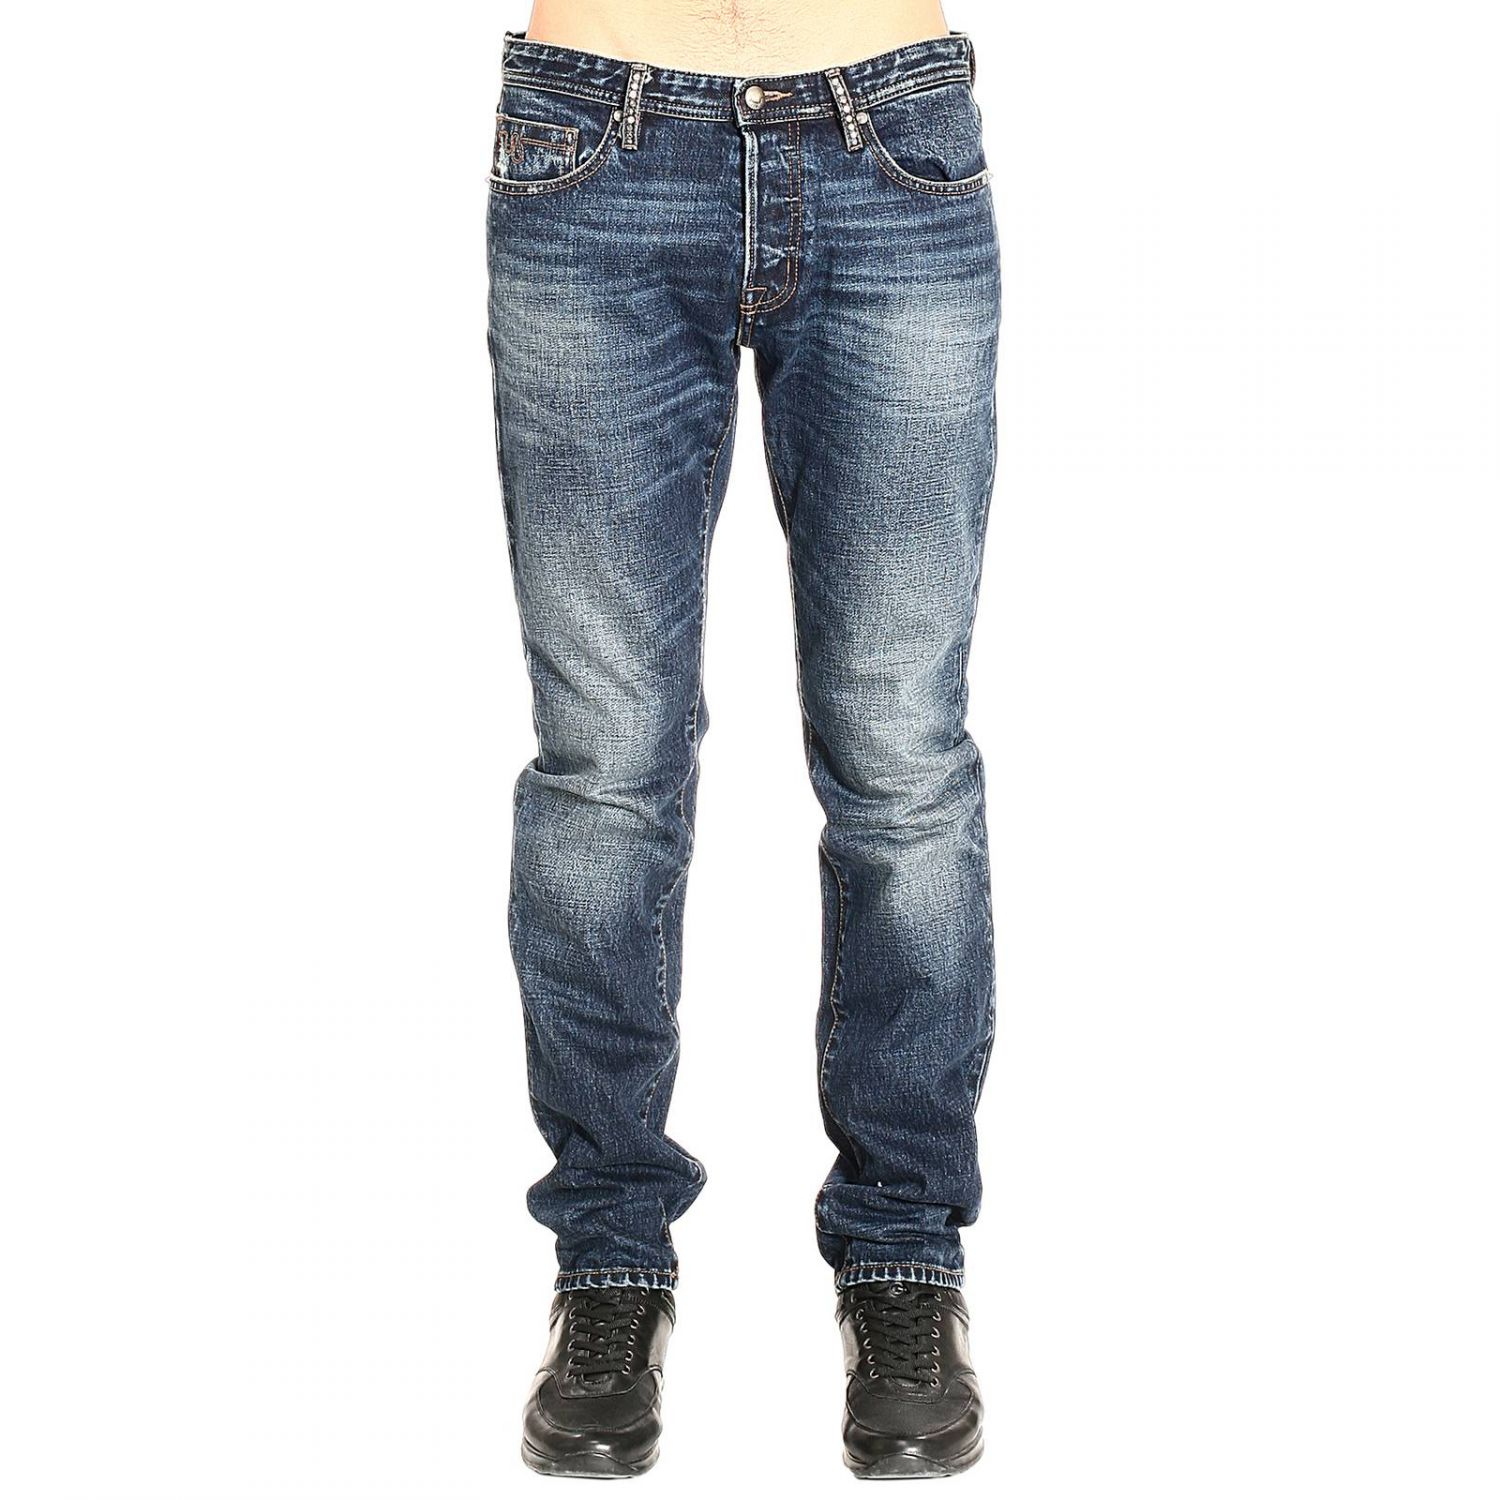 Lyst - Just Cavalli Regular-Fit Denim Jeans in Blue for Men